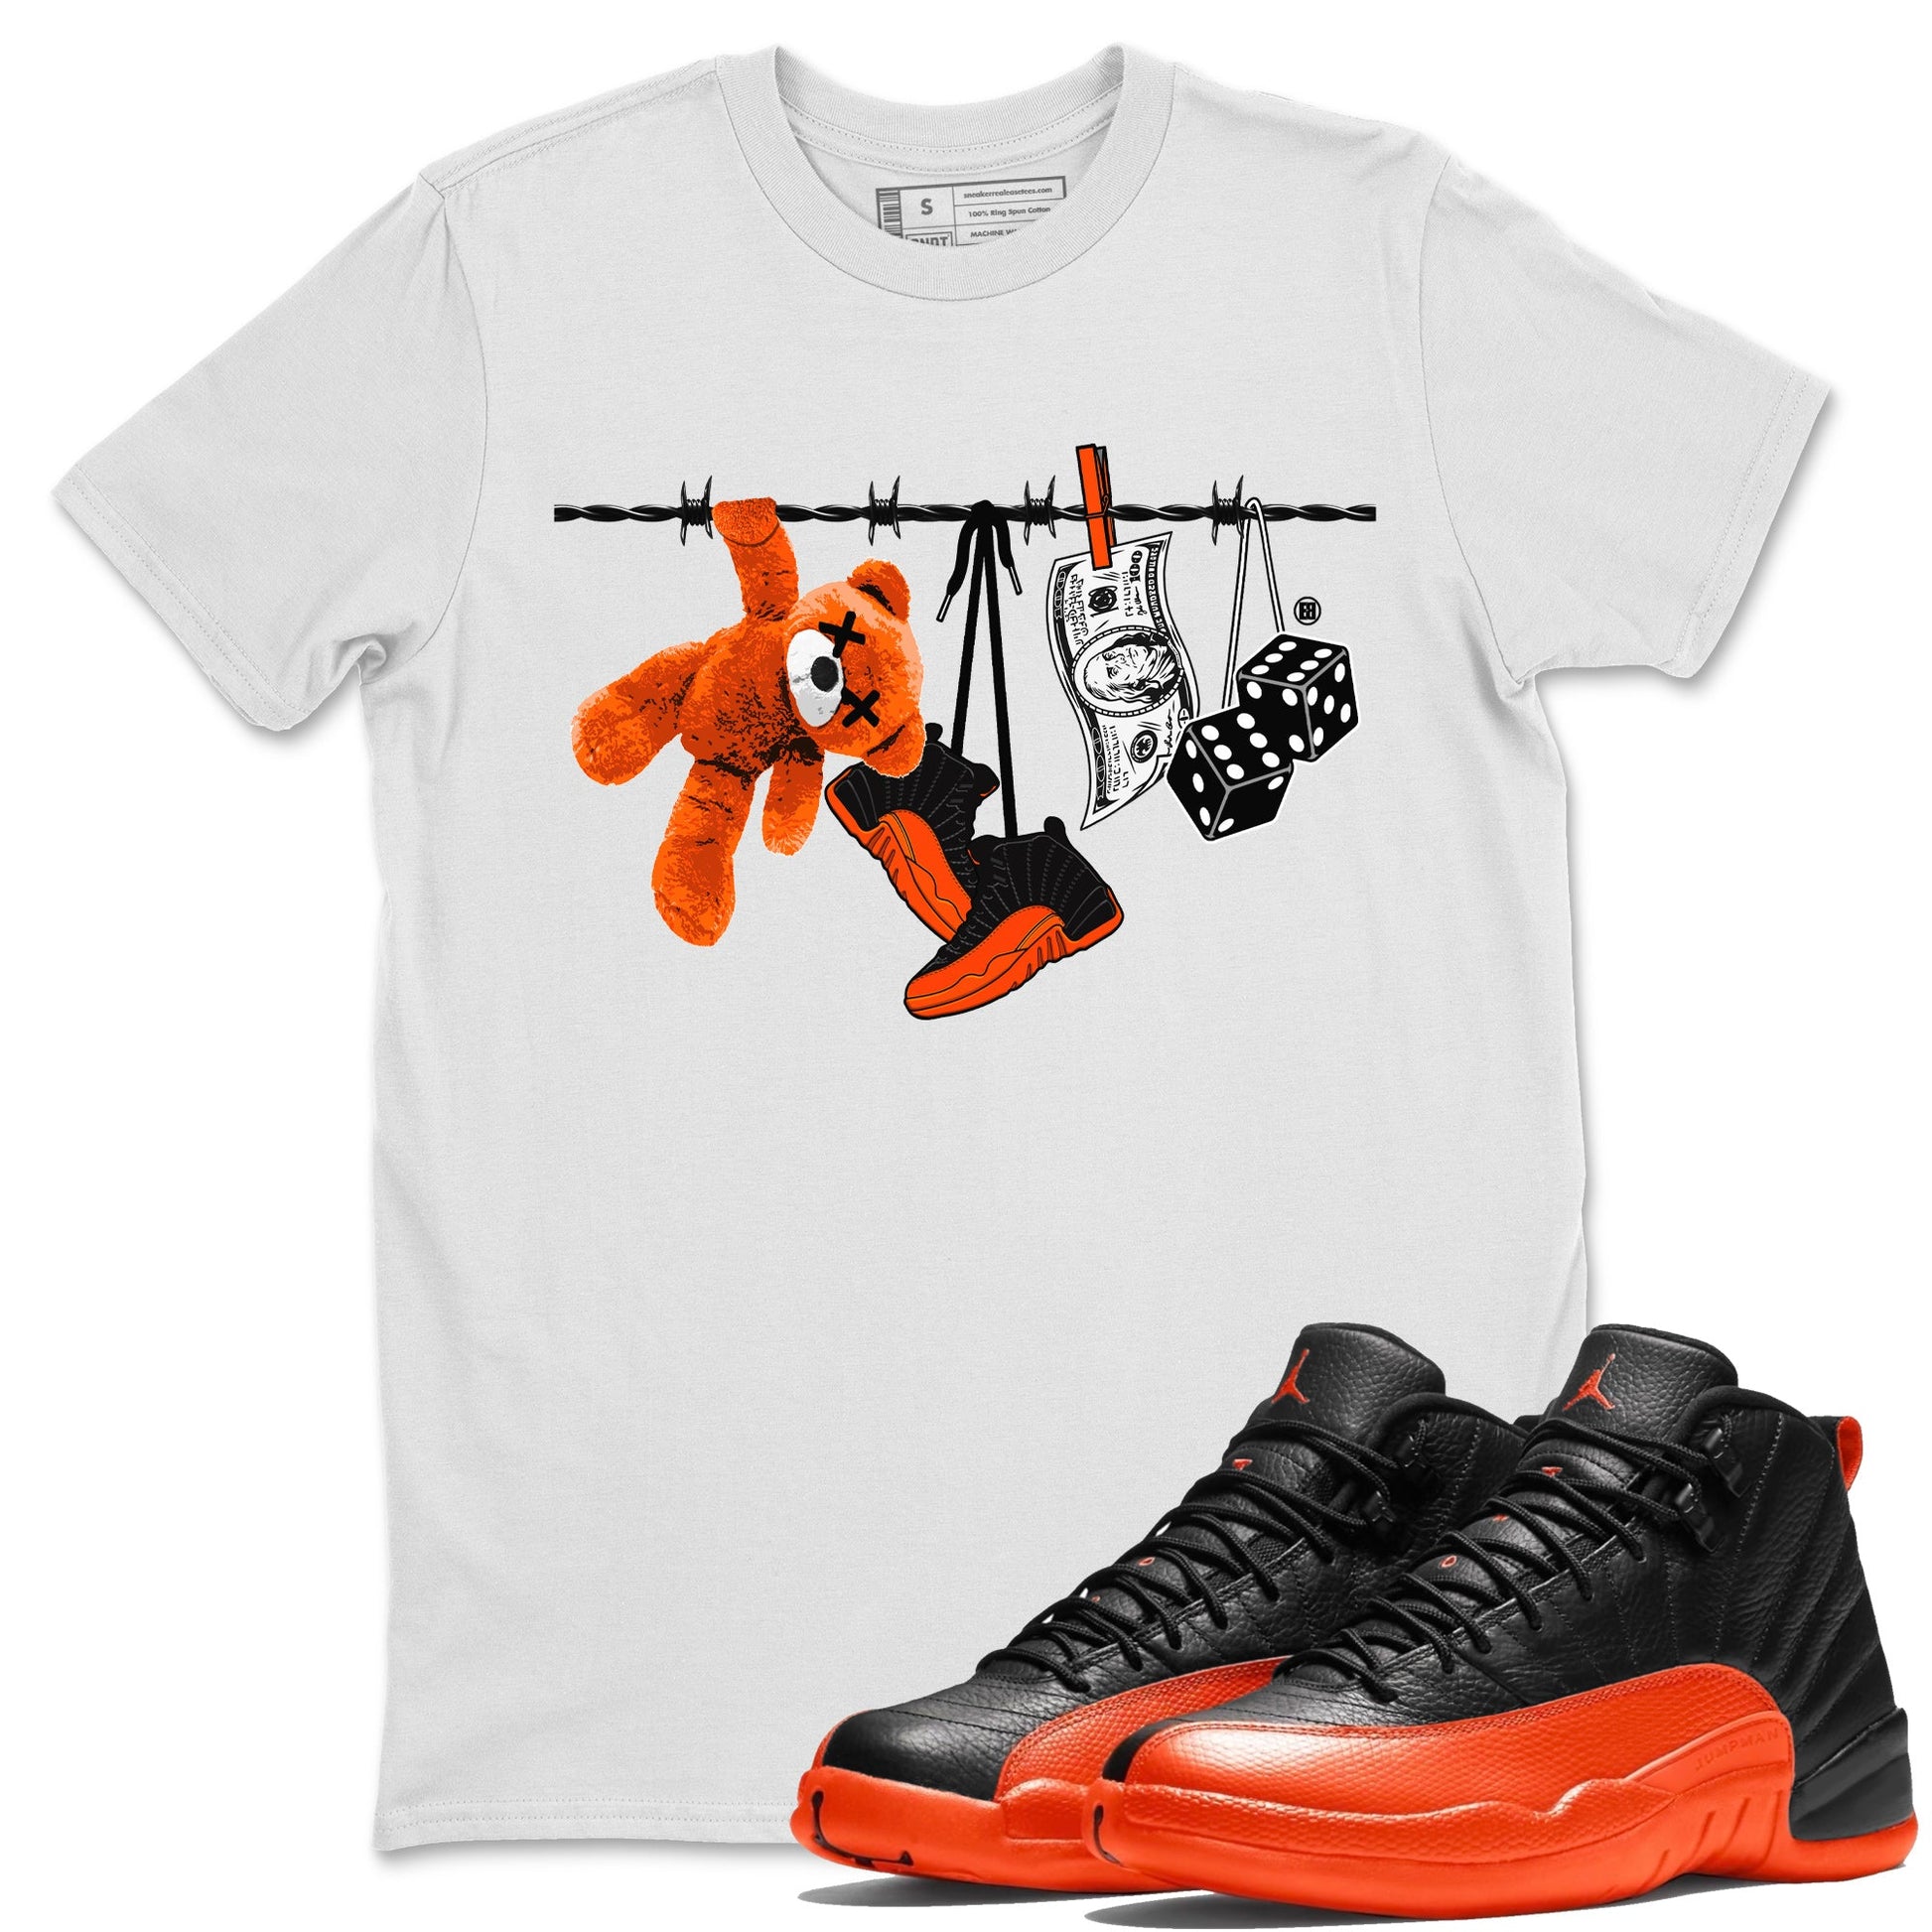 Air Jordan 12 Brilliant Orange Sneaker Match Tees Clothesline Sneaker Tees 12s Brilliant Orange Tee Unisex Shirts White 1